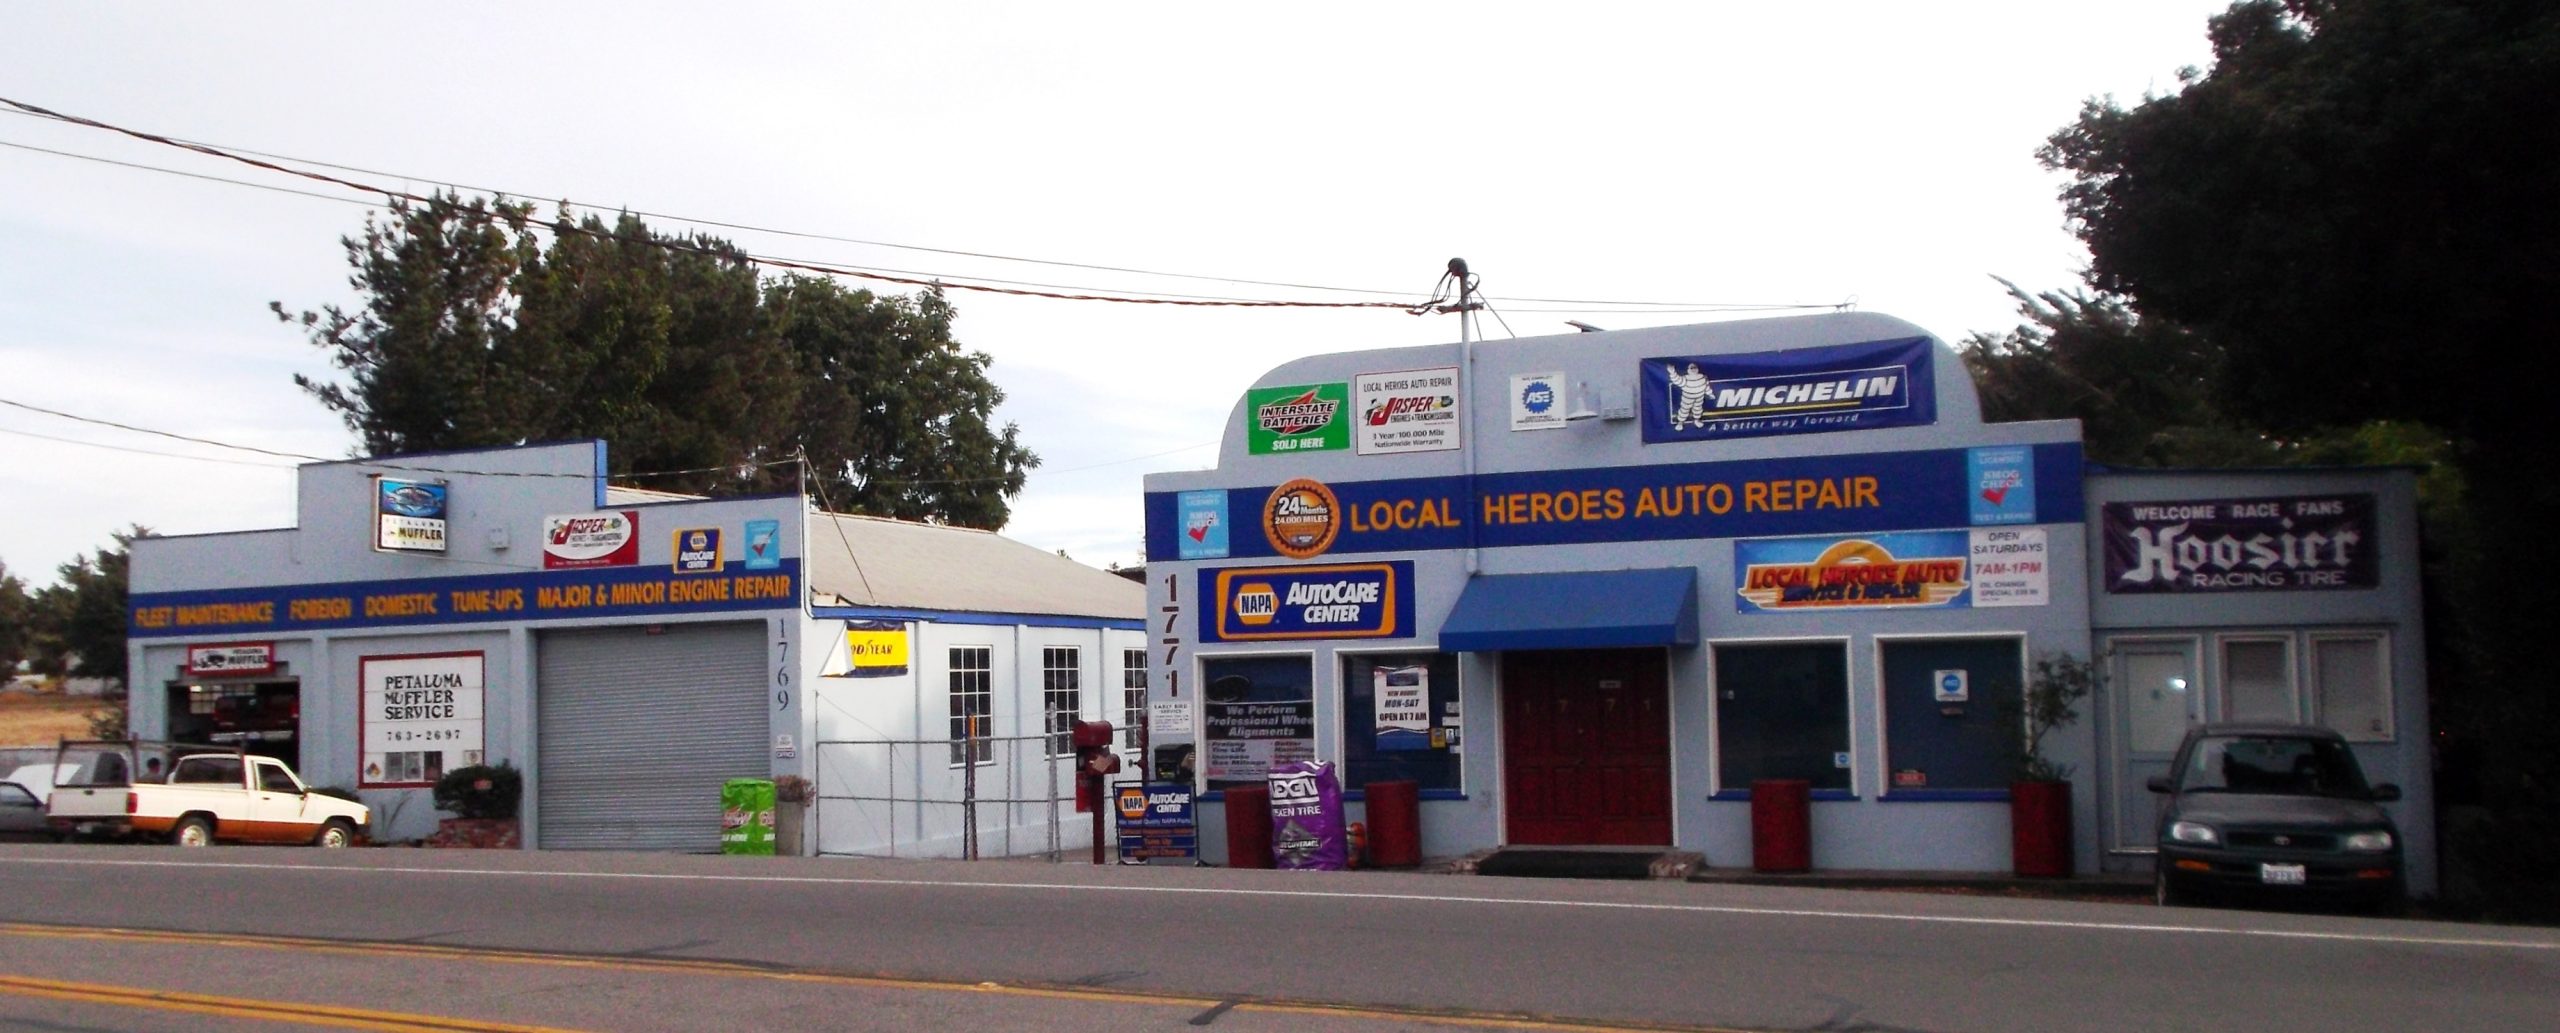 Car Insurance In sonoma Ca Dans Local Heroes Auto Repair In Petaluma Ca 707 765 1